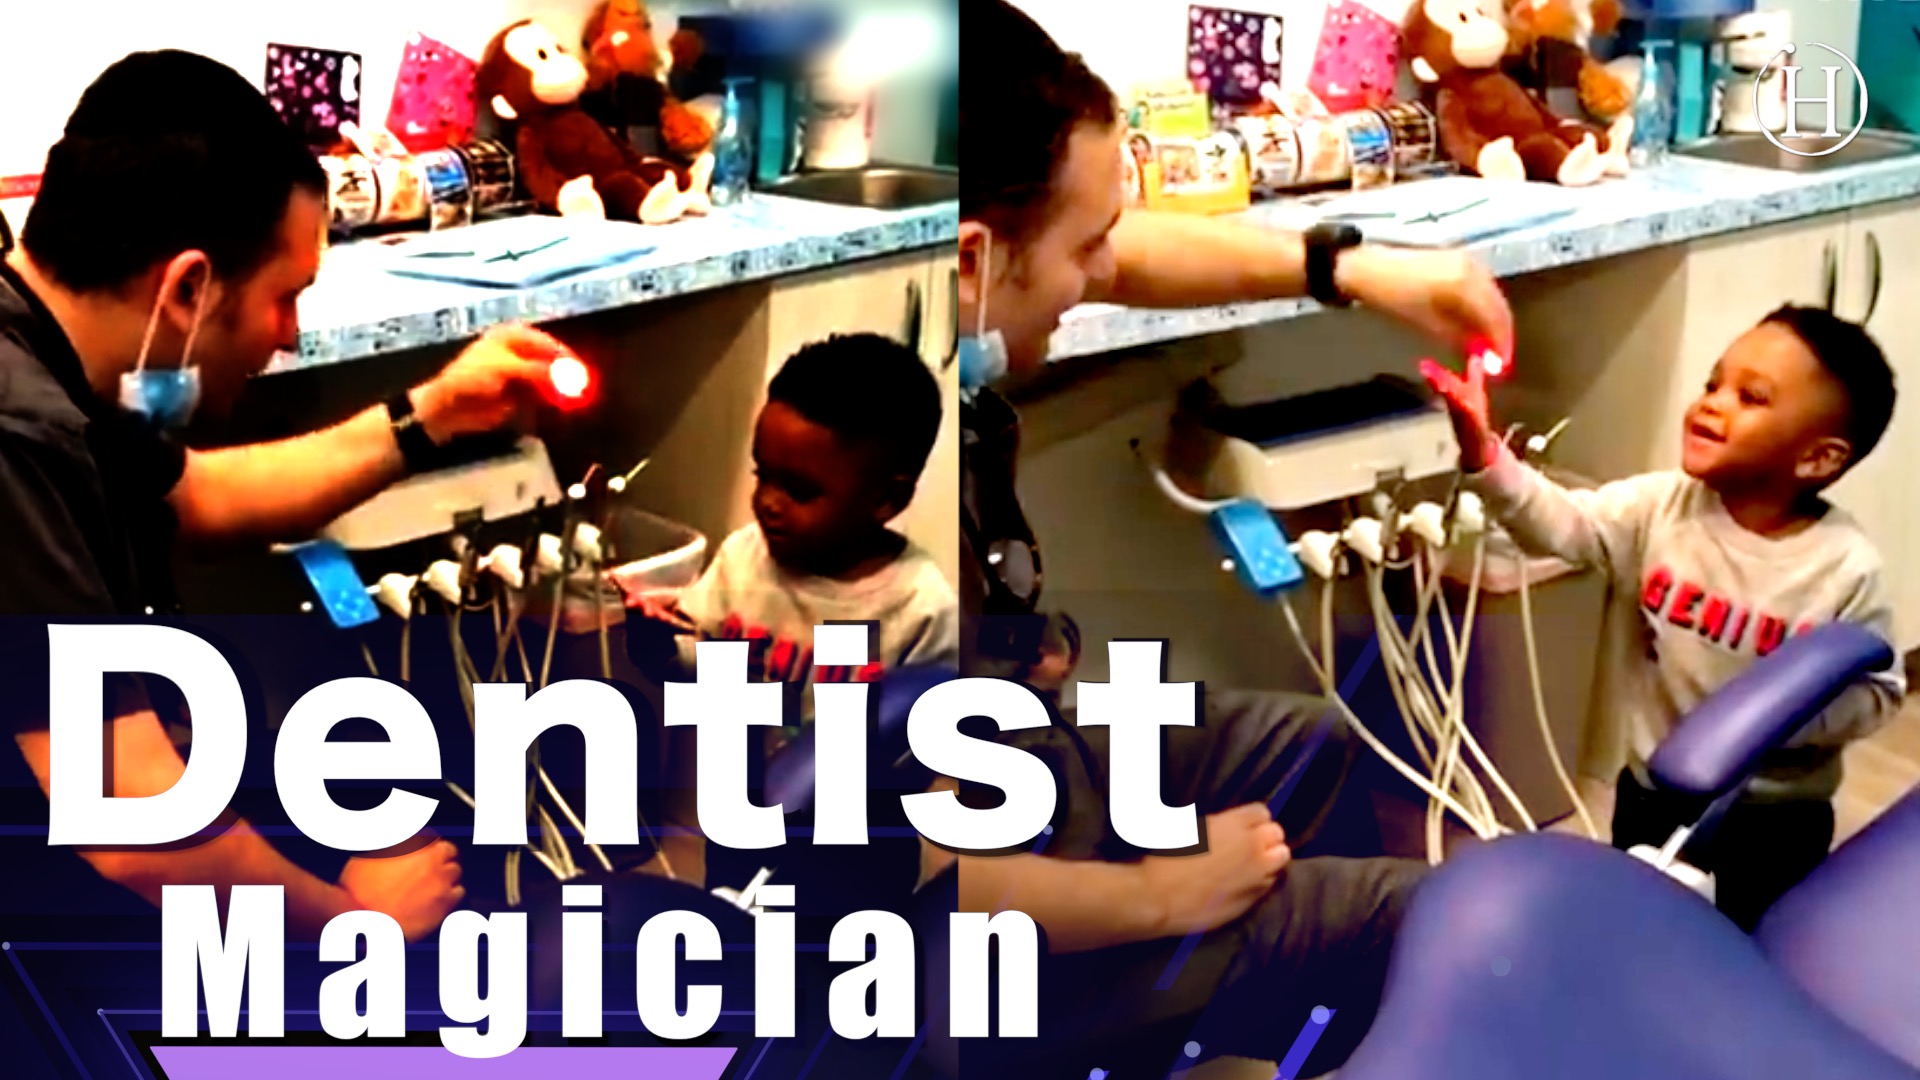 Dentist Magician Entertains Kid | Humanity Life